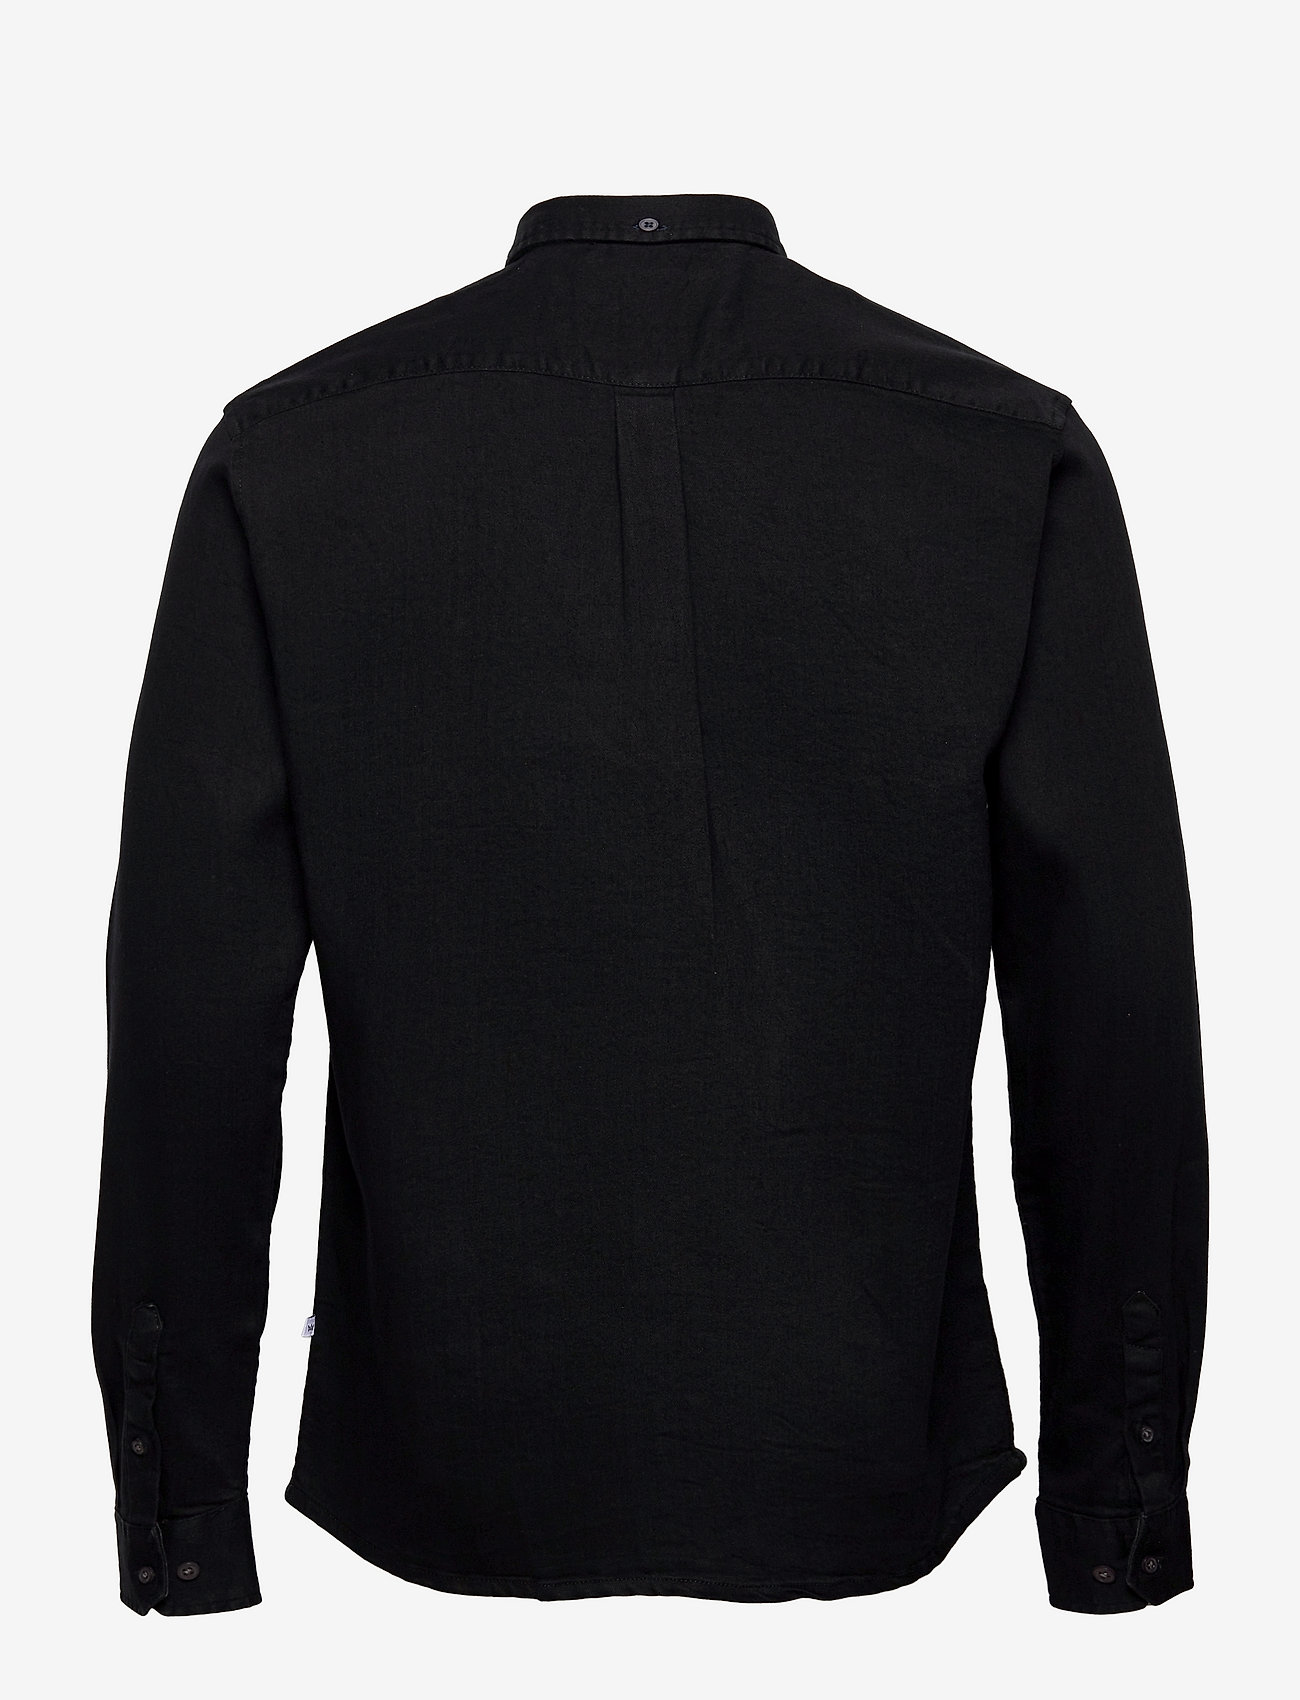 Kronstadt - Johan Denim shirt - black - 1